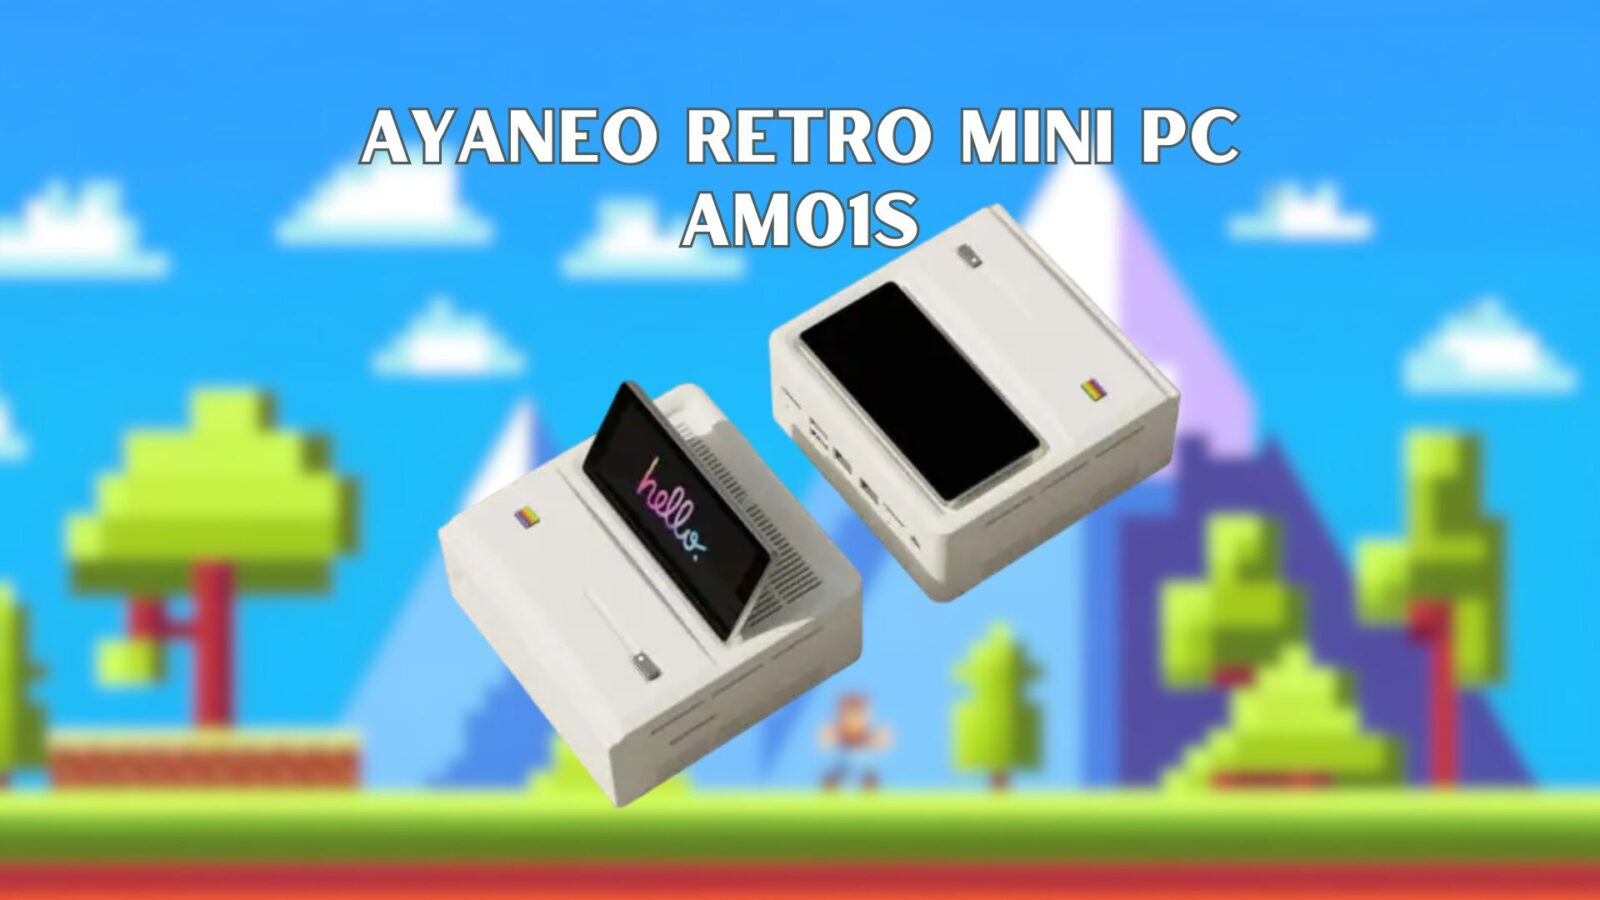 AYANEO Retro Mini PC AM01S announced